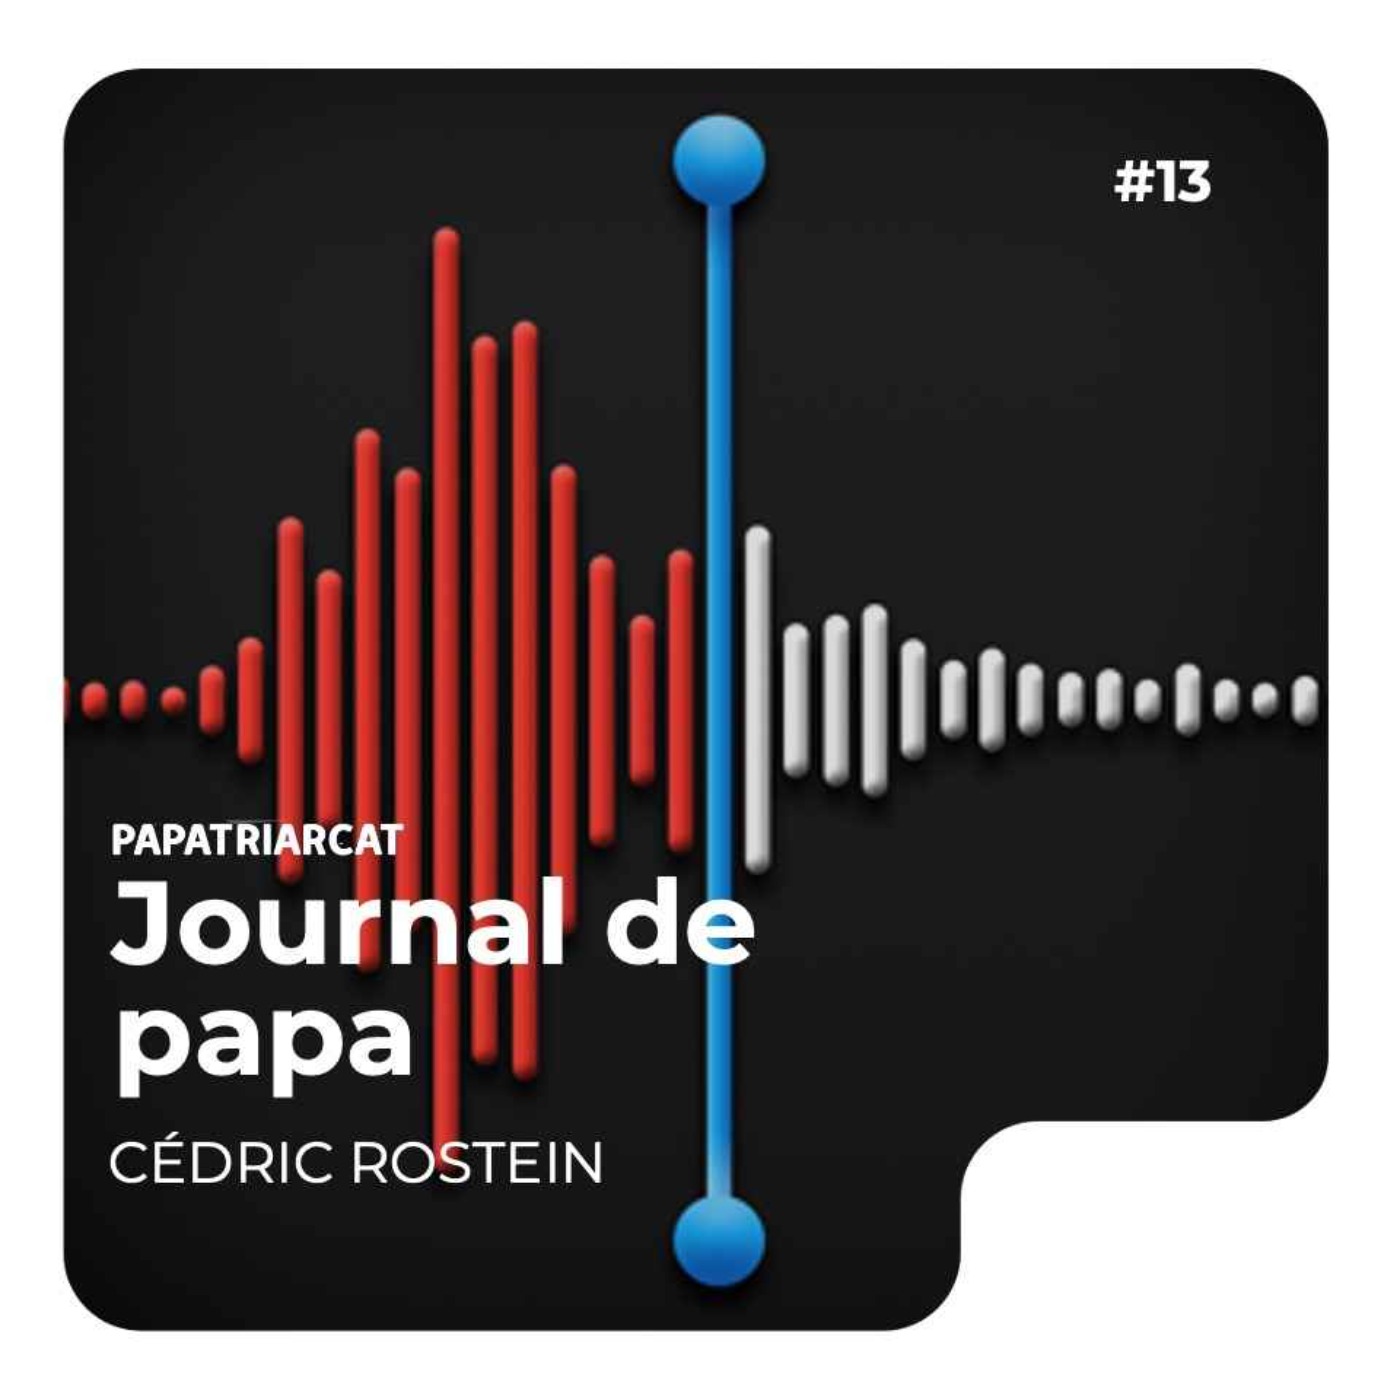 Journal de papa #13